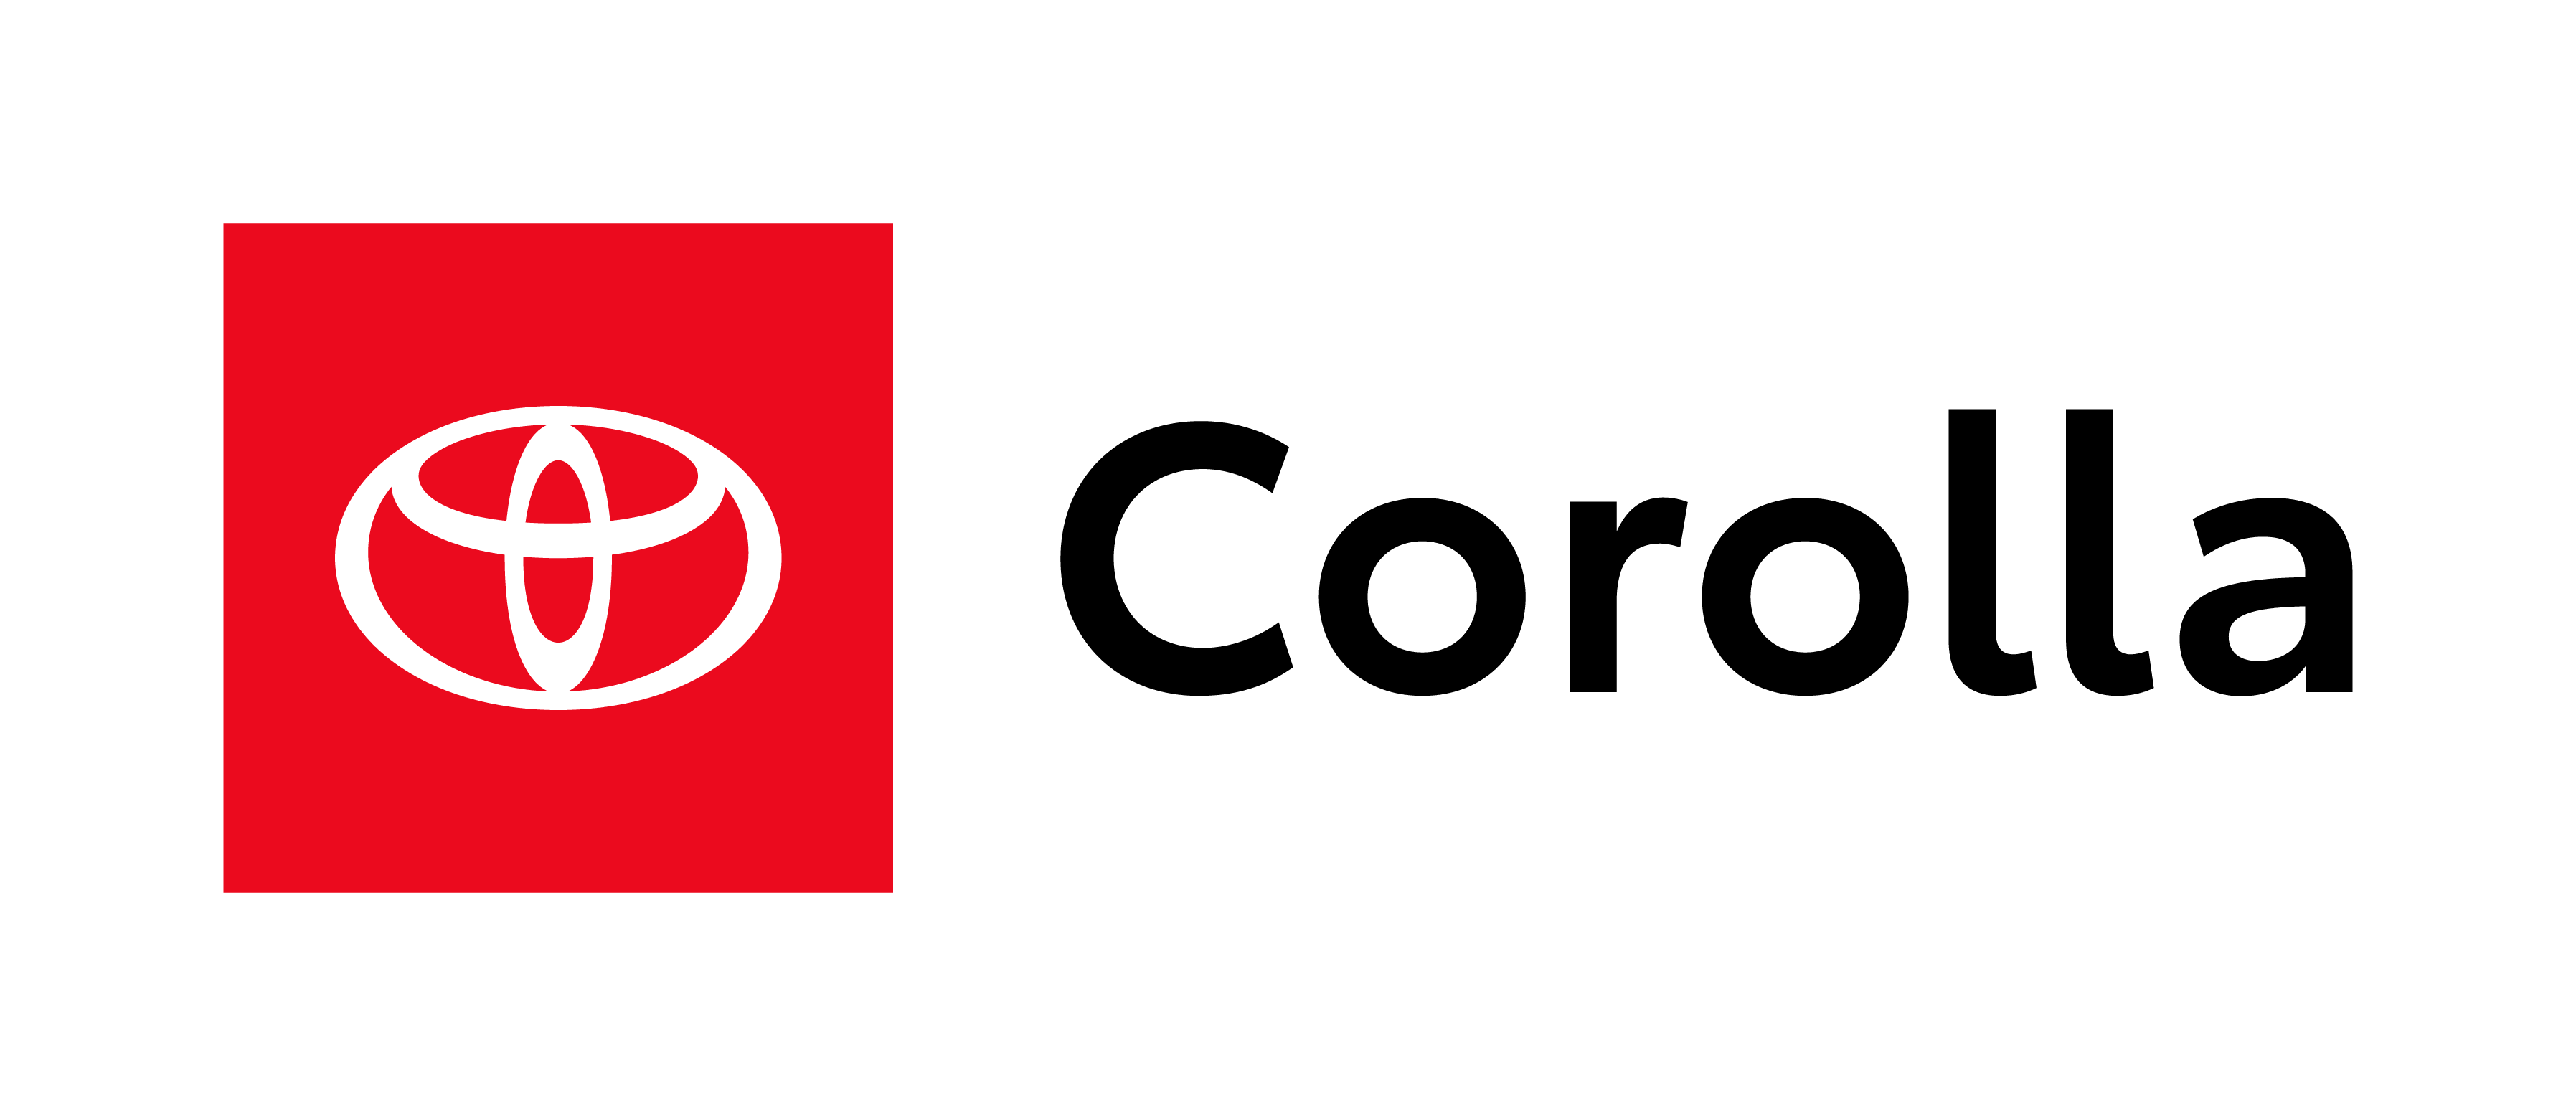 Corolla Logo - 2020 Toyota Corolla